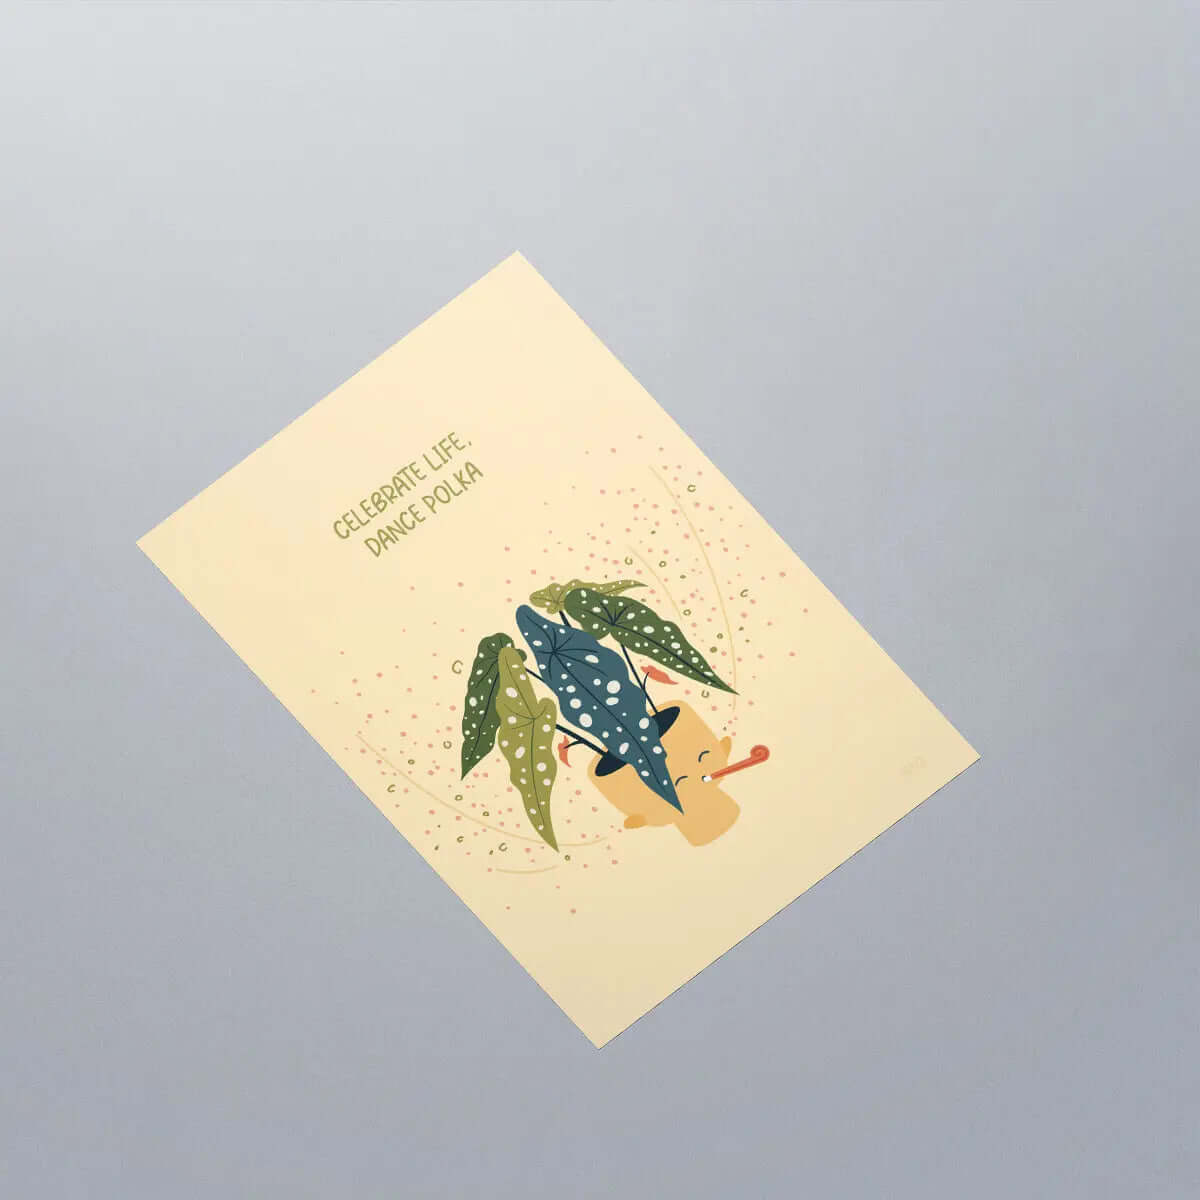 Greeting Cards "Plant Life" - Multiple Designs - SMUKHI